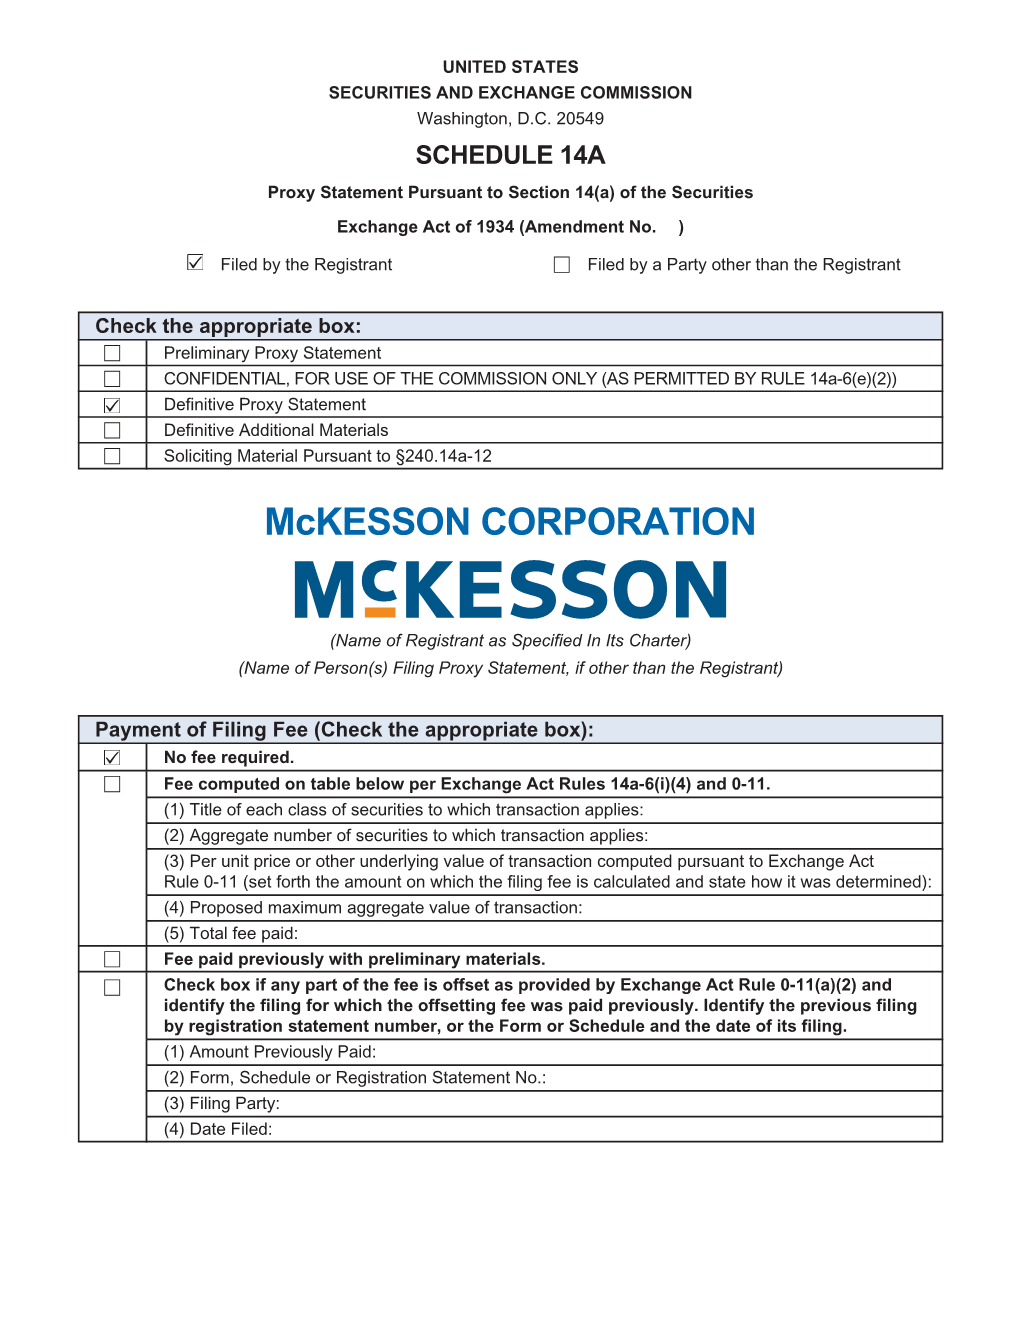 Mckesson CORPORATION